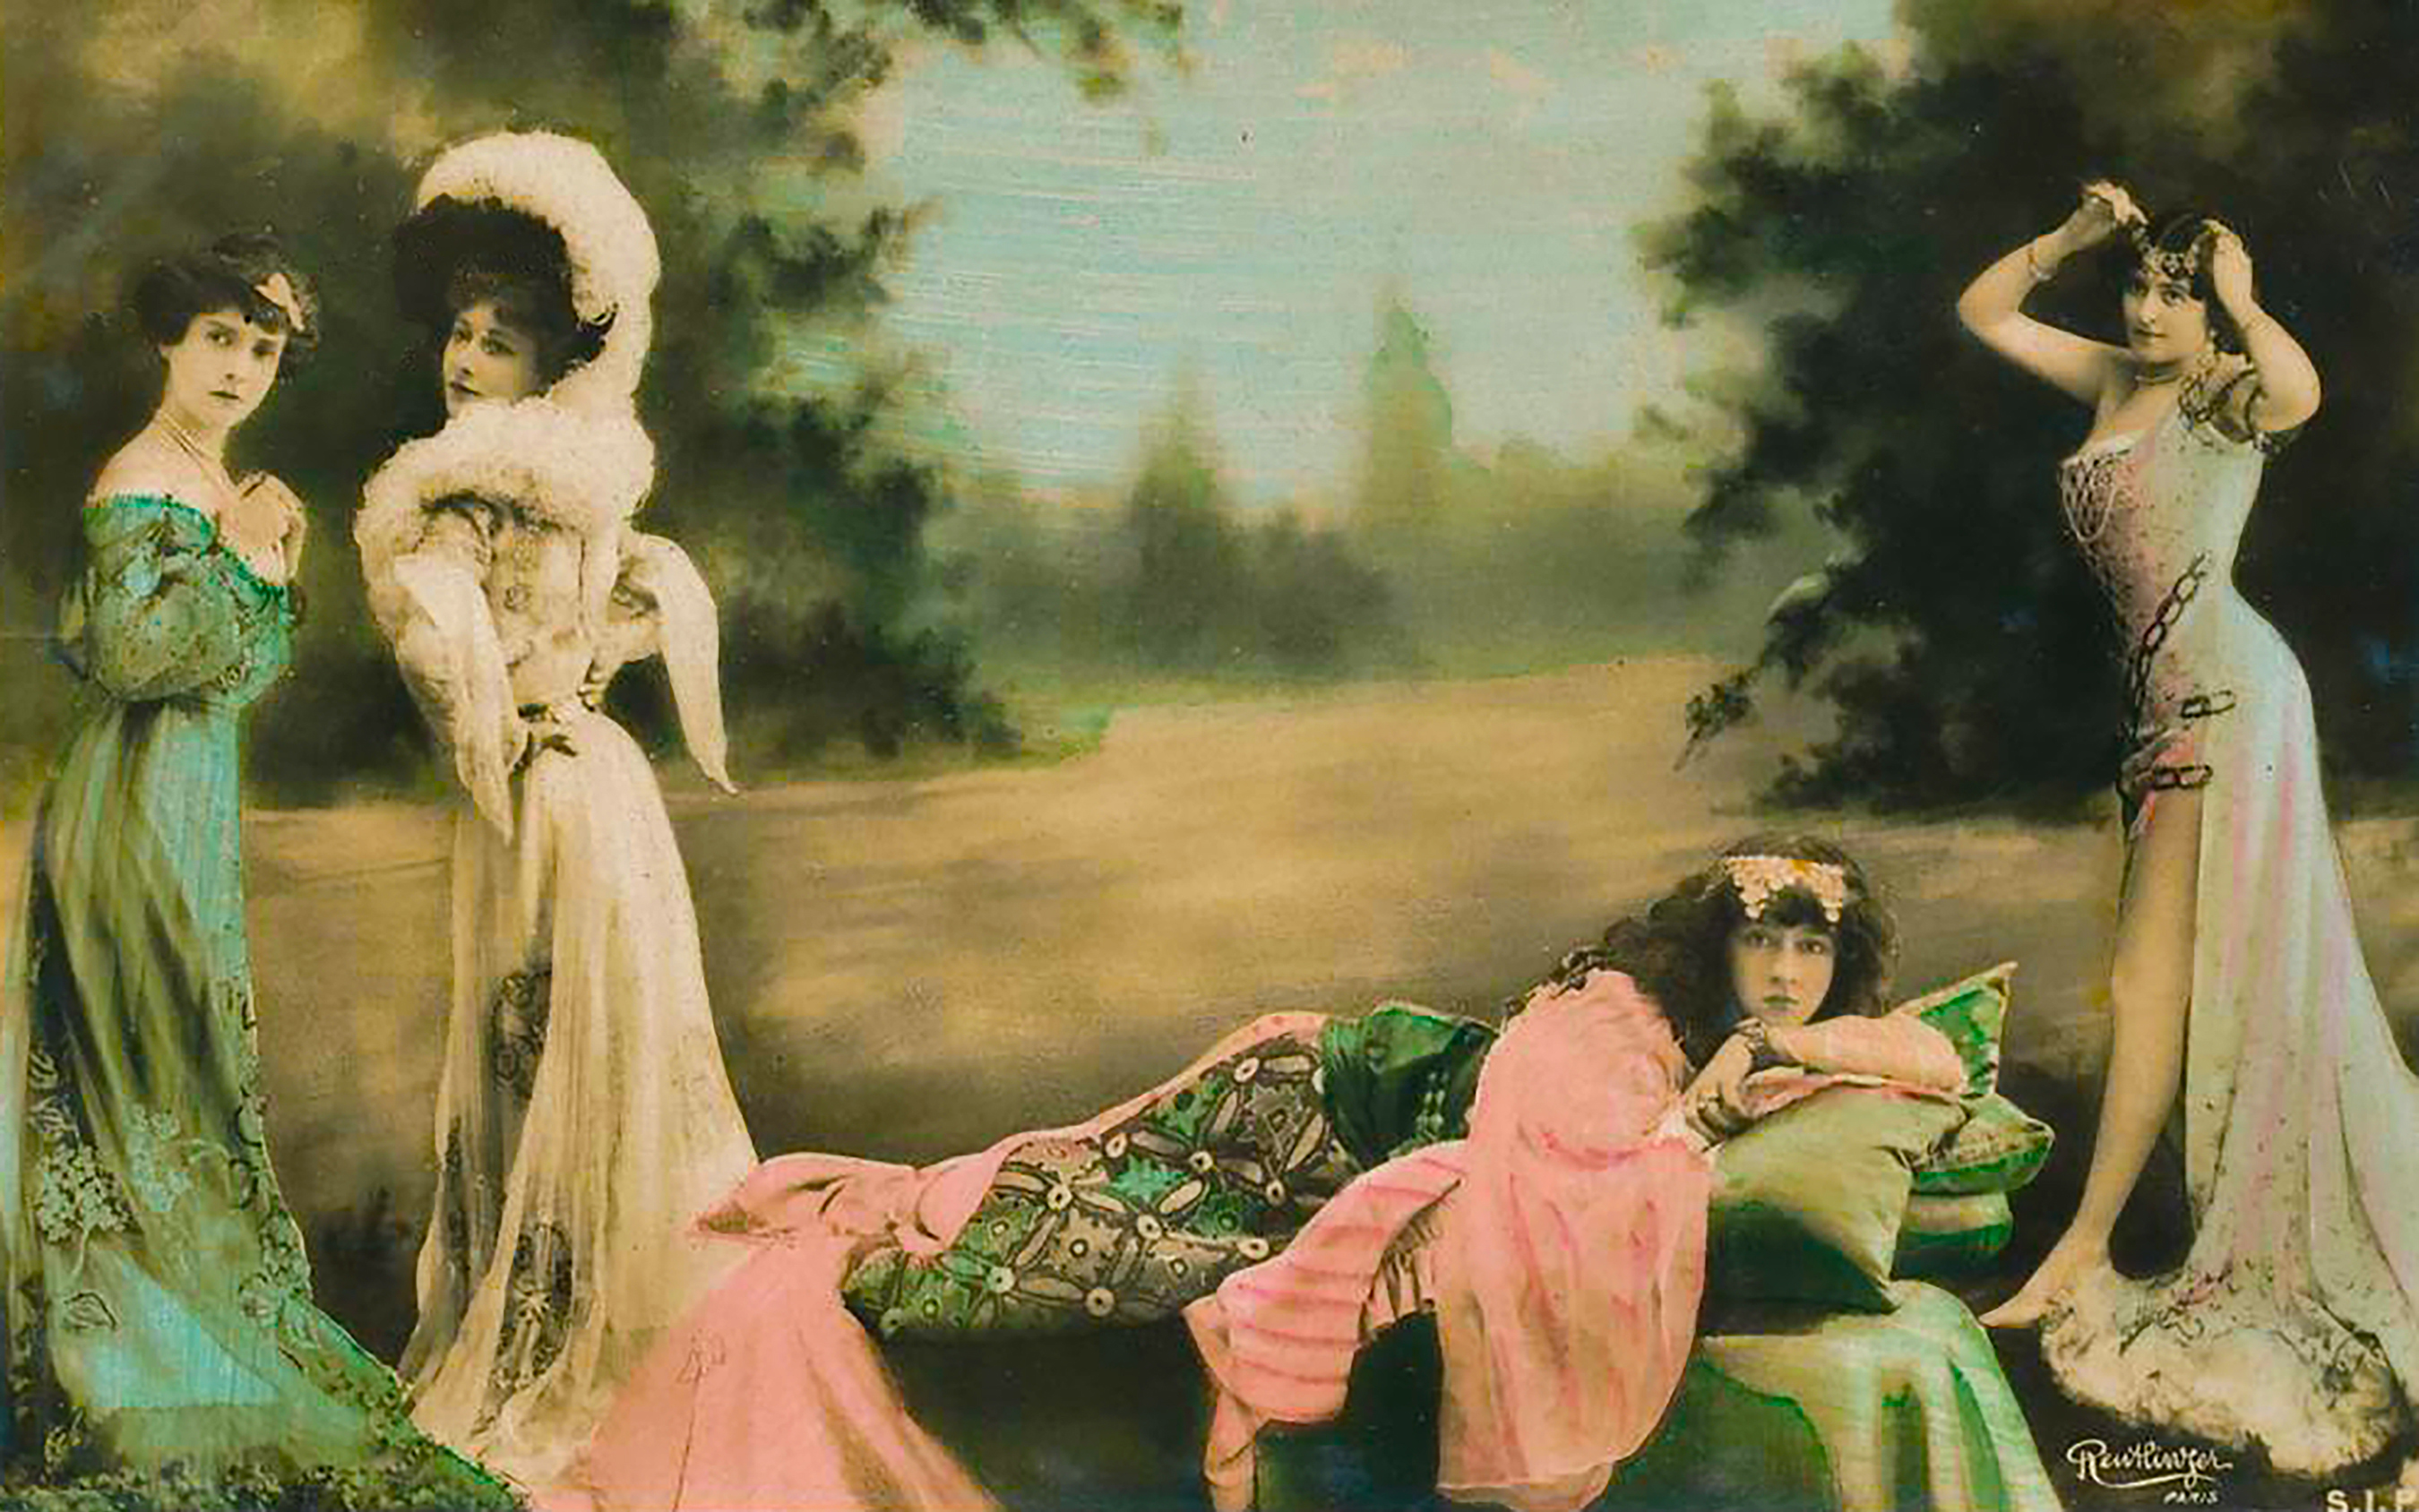 Scandalous lives of 19th century French courtesans exposed / Скандальная жизнь французских куртизанок XIX века стала достоянием публики